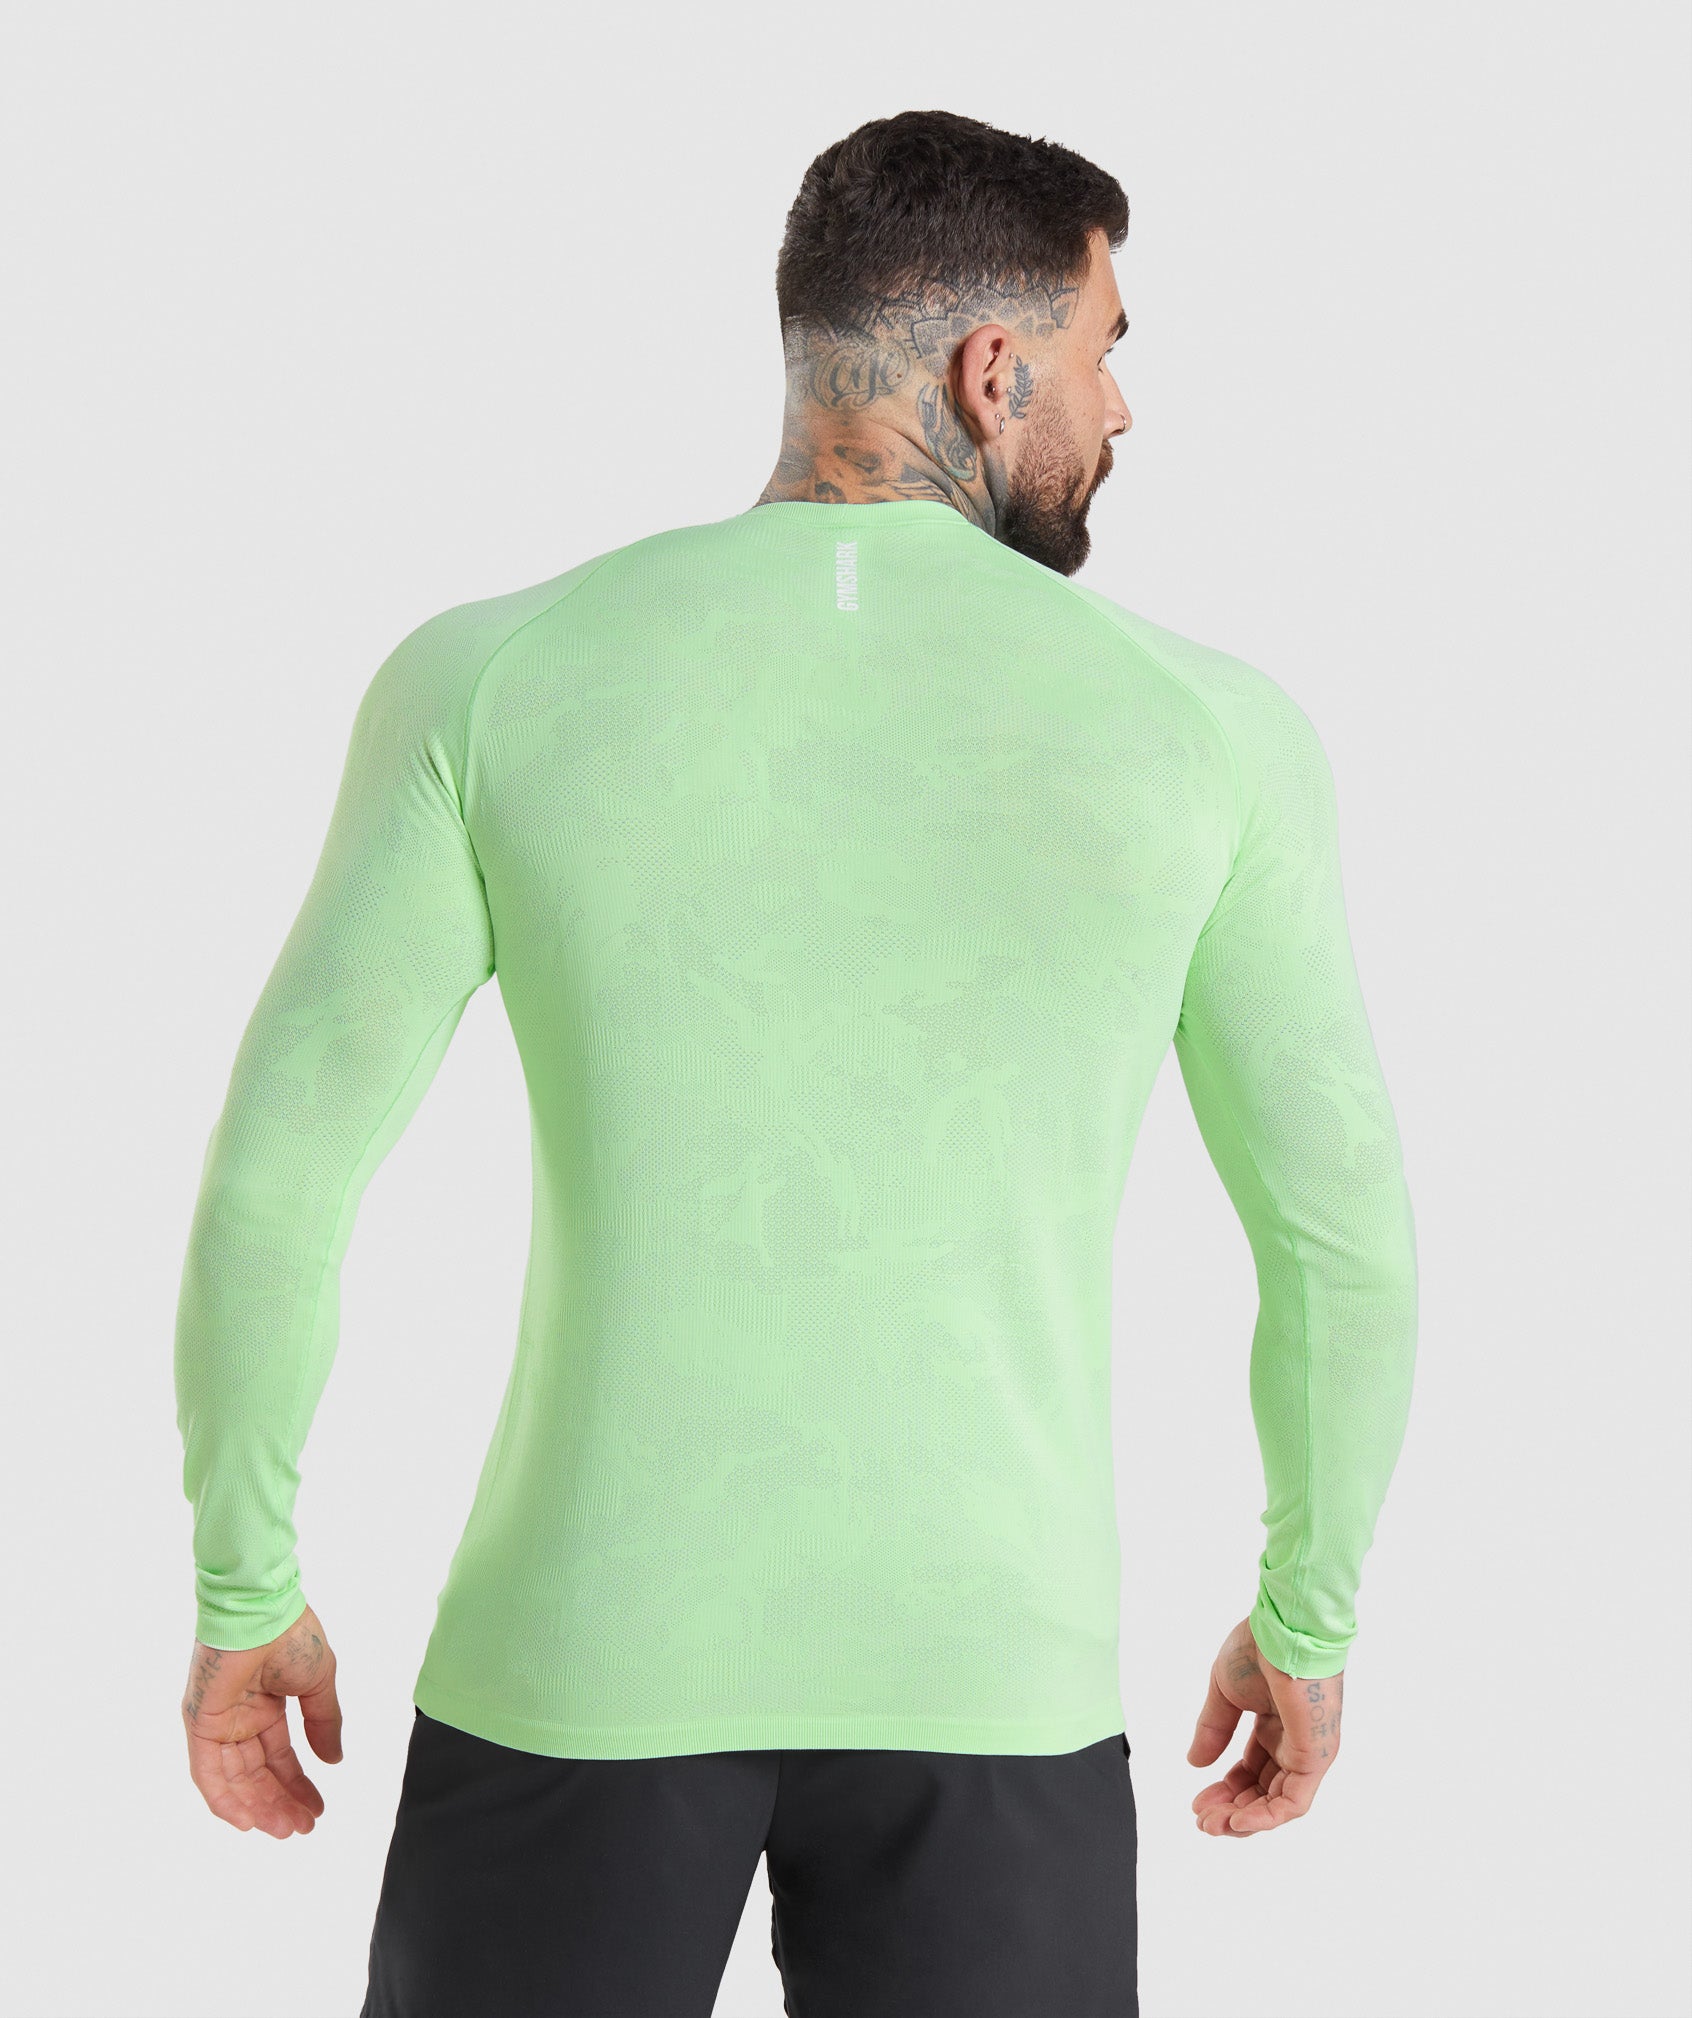 NEW Men's GYMSHARK Arrival Long Sleeve Shirt Aqua Green Performance Top Sz  XXL